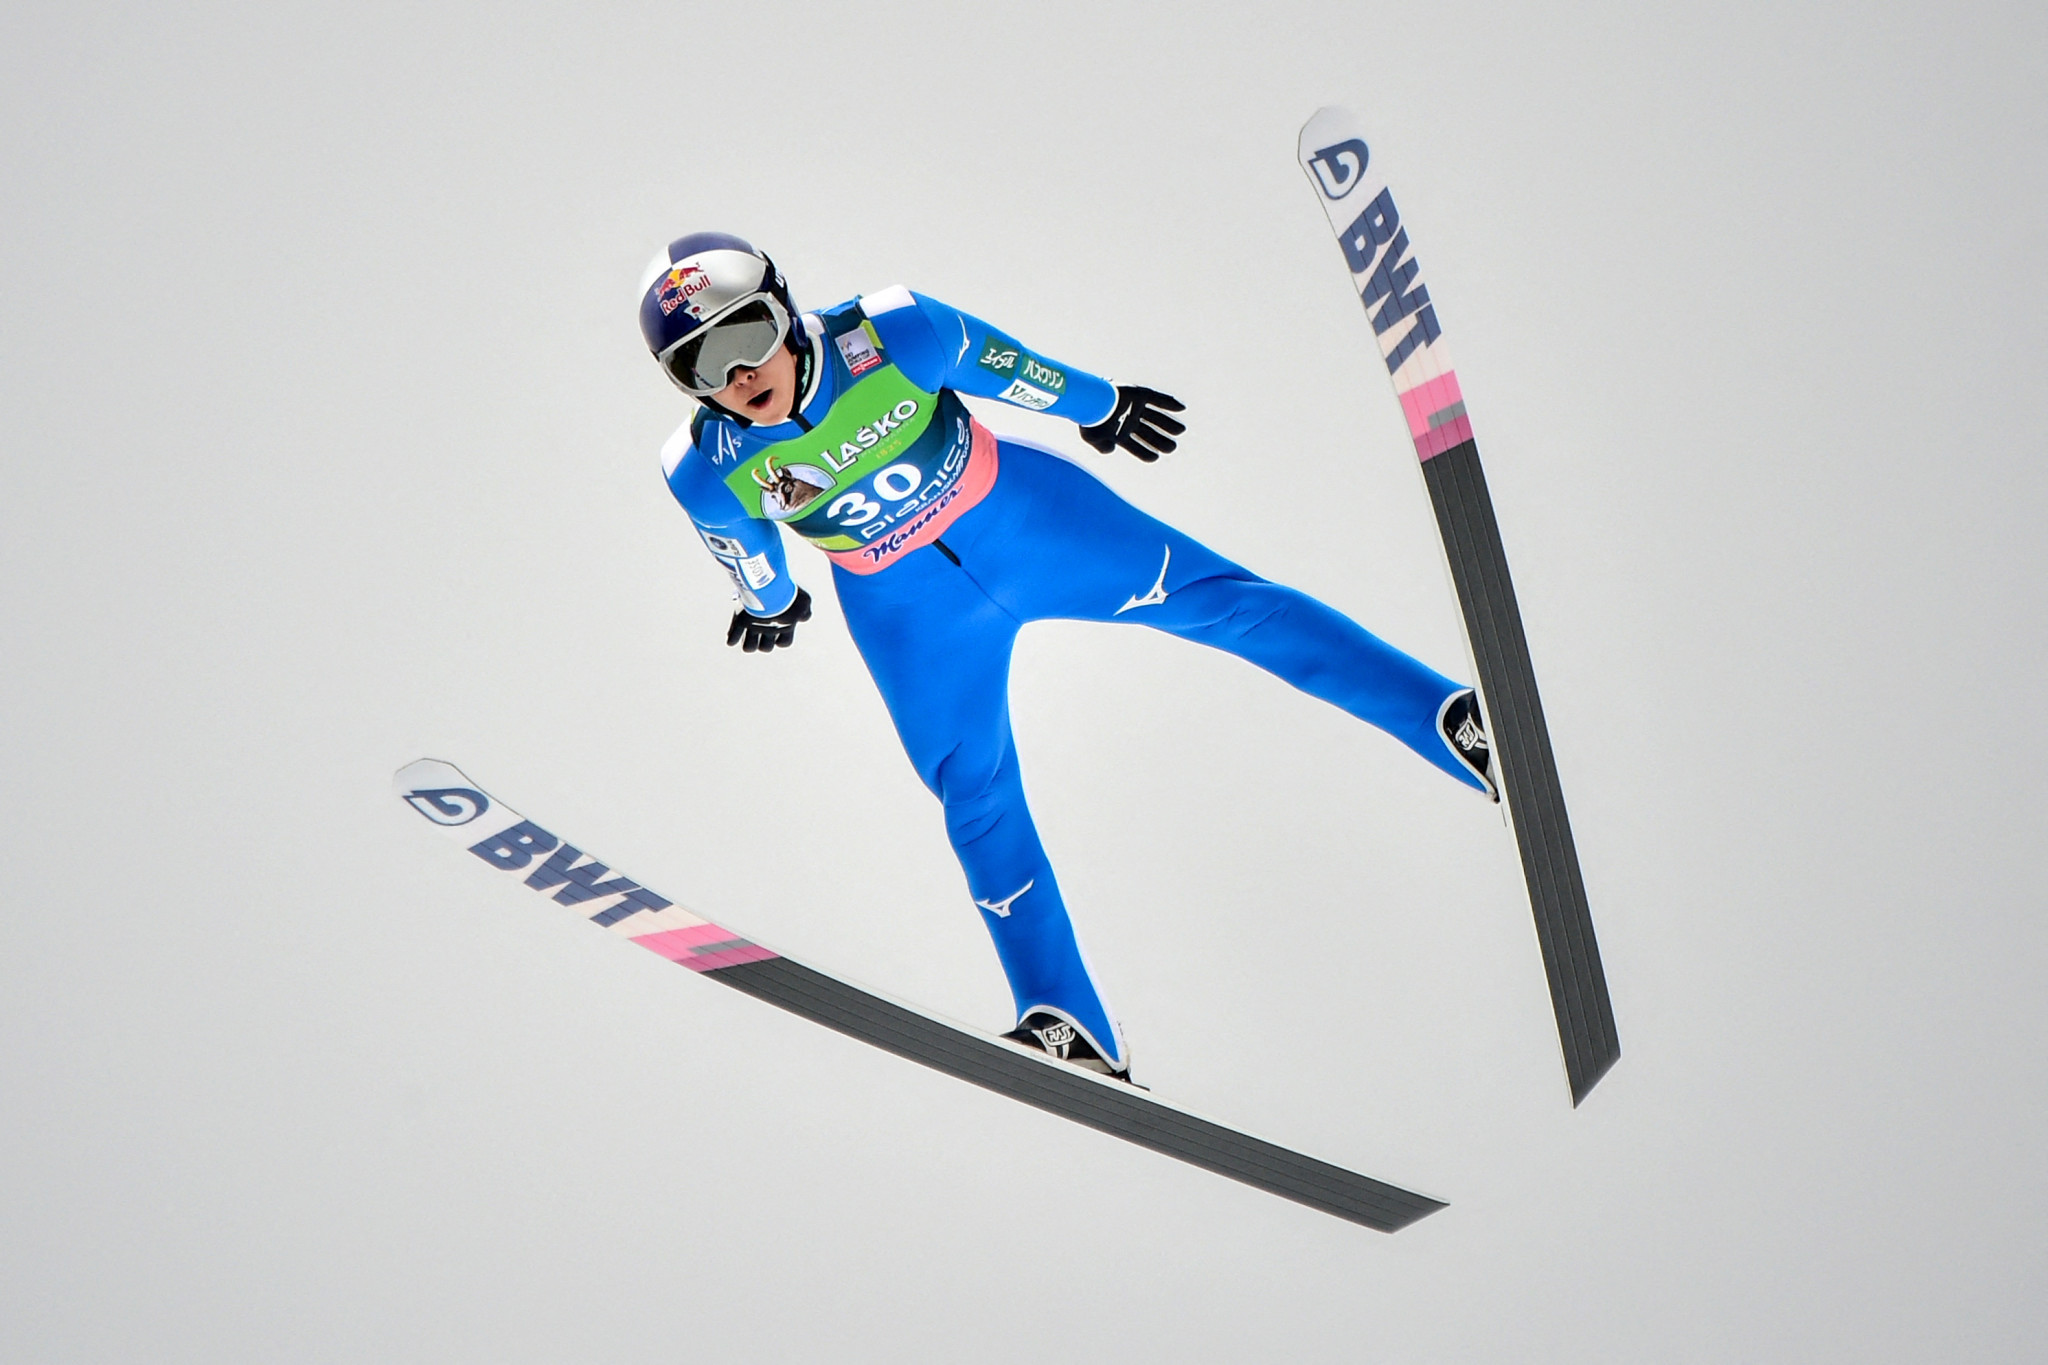 Kobayashi tops men's FIS Ski Jumping World Cup qualification in Ruka as Granerud eliminated